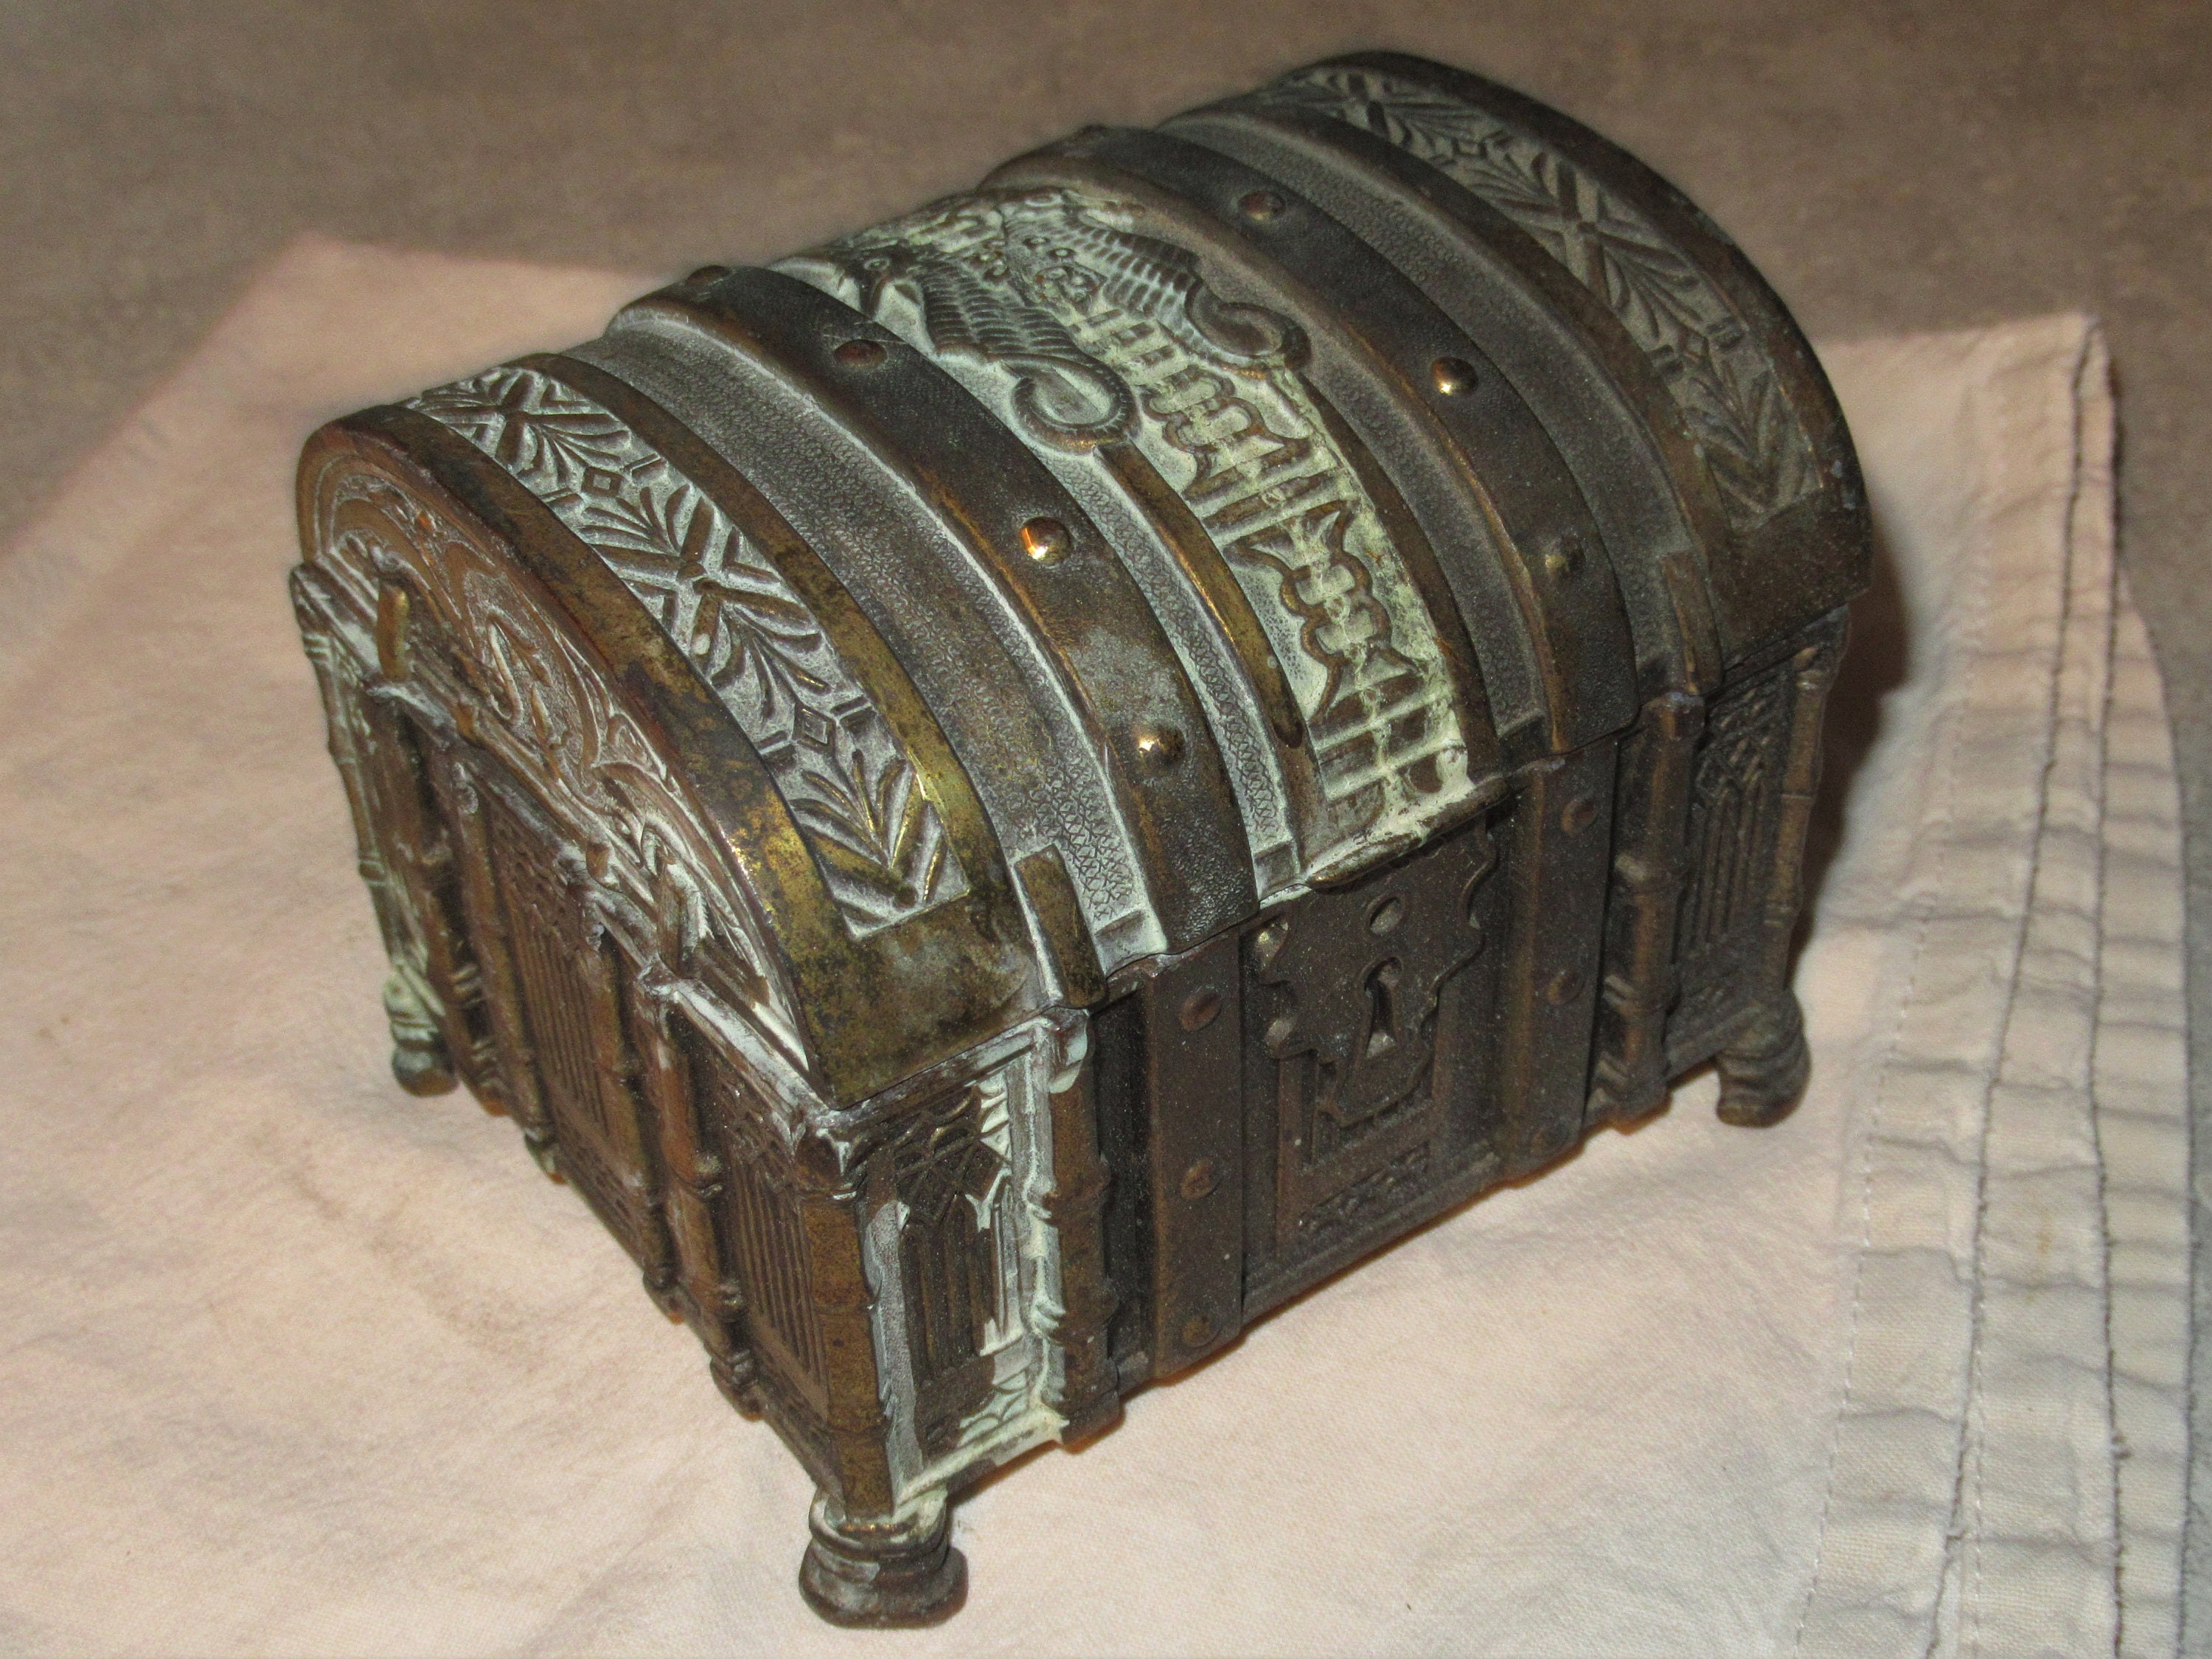  SICOHOME Treasure Box,5.9 Vintage Small Trunk Box for